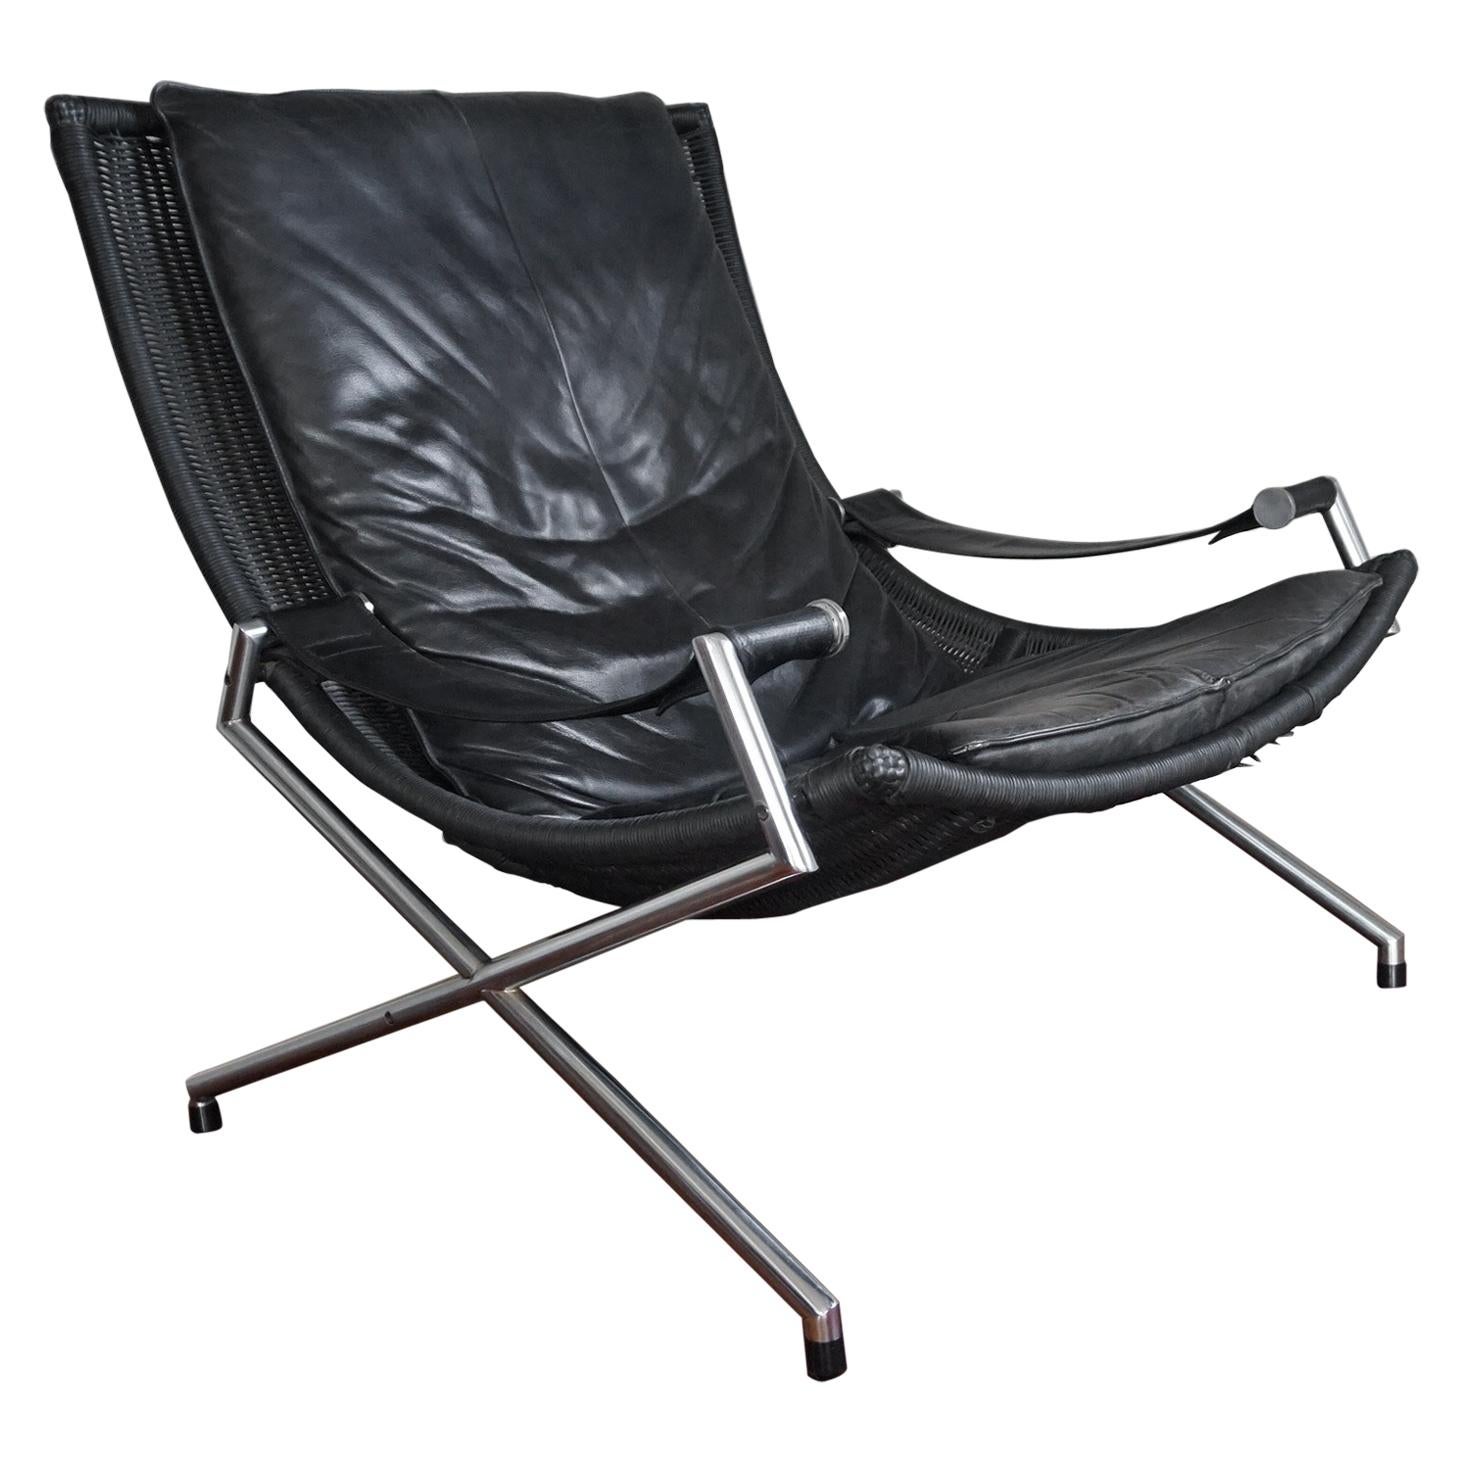 20th Century Leather Lounge Chair by Gerard Van Den Berg, 1980s Dutch Design